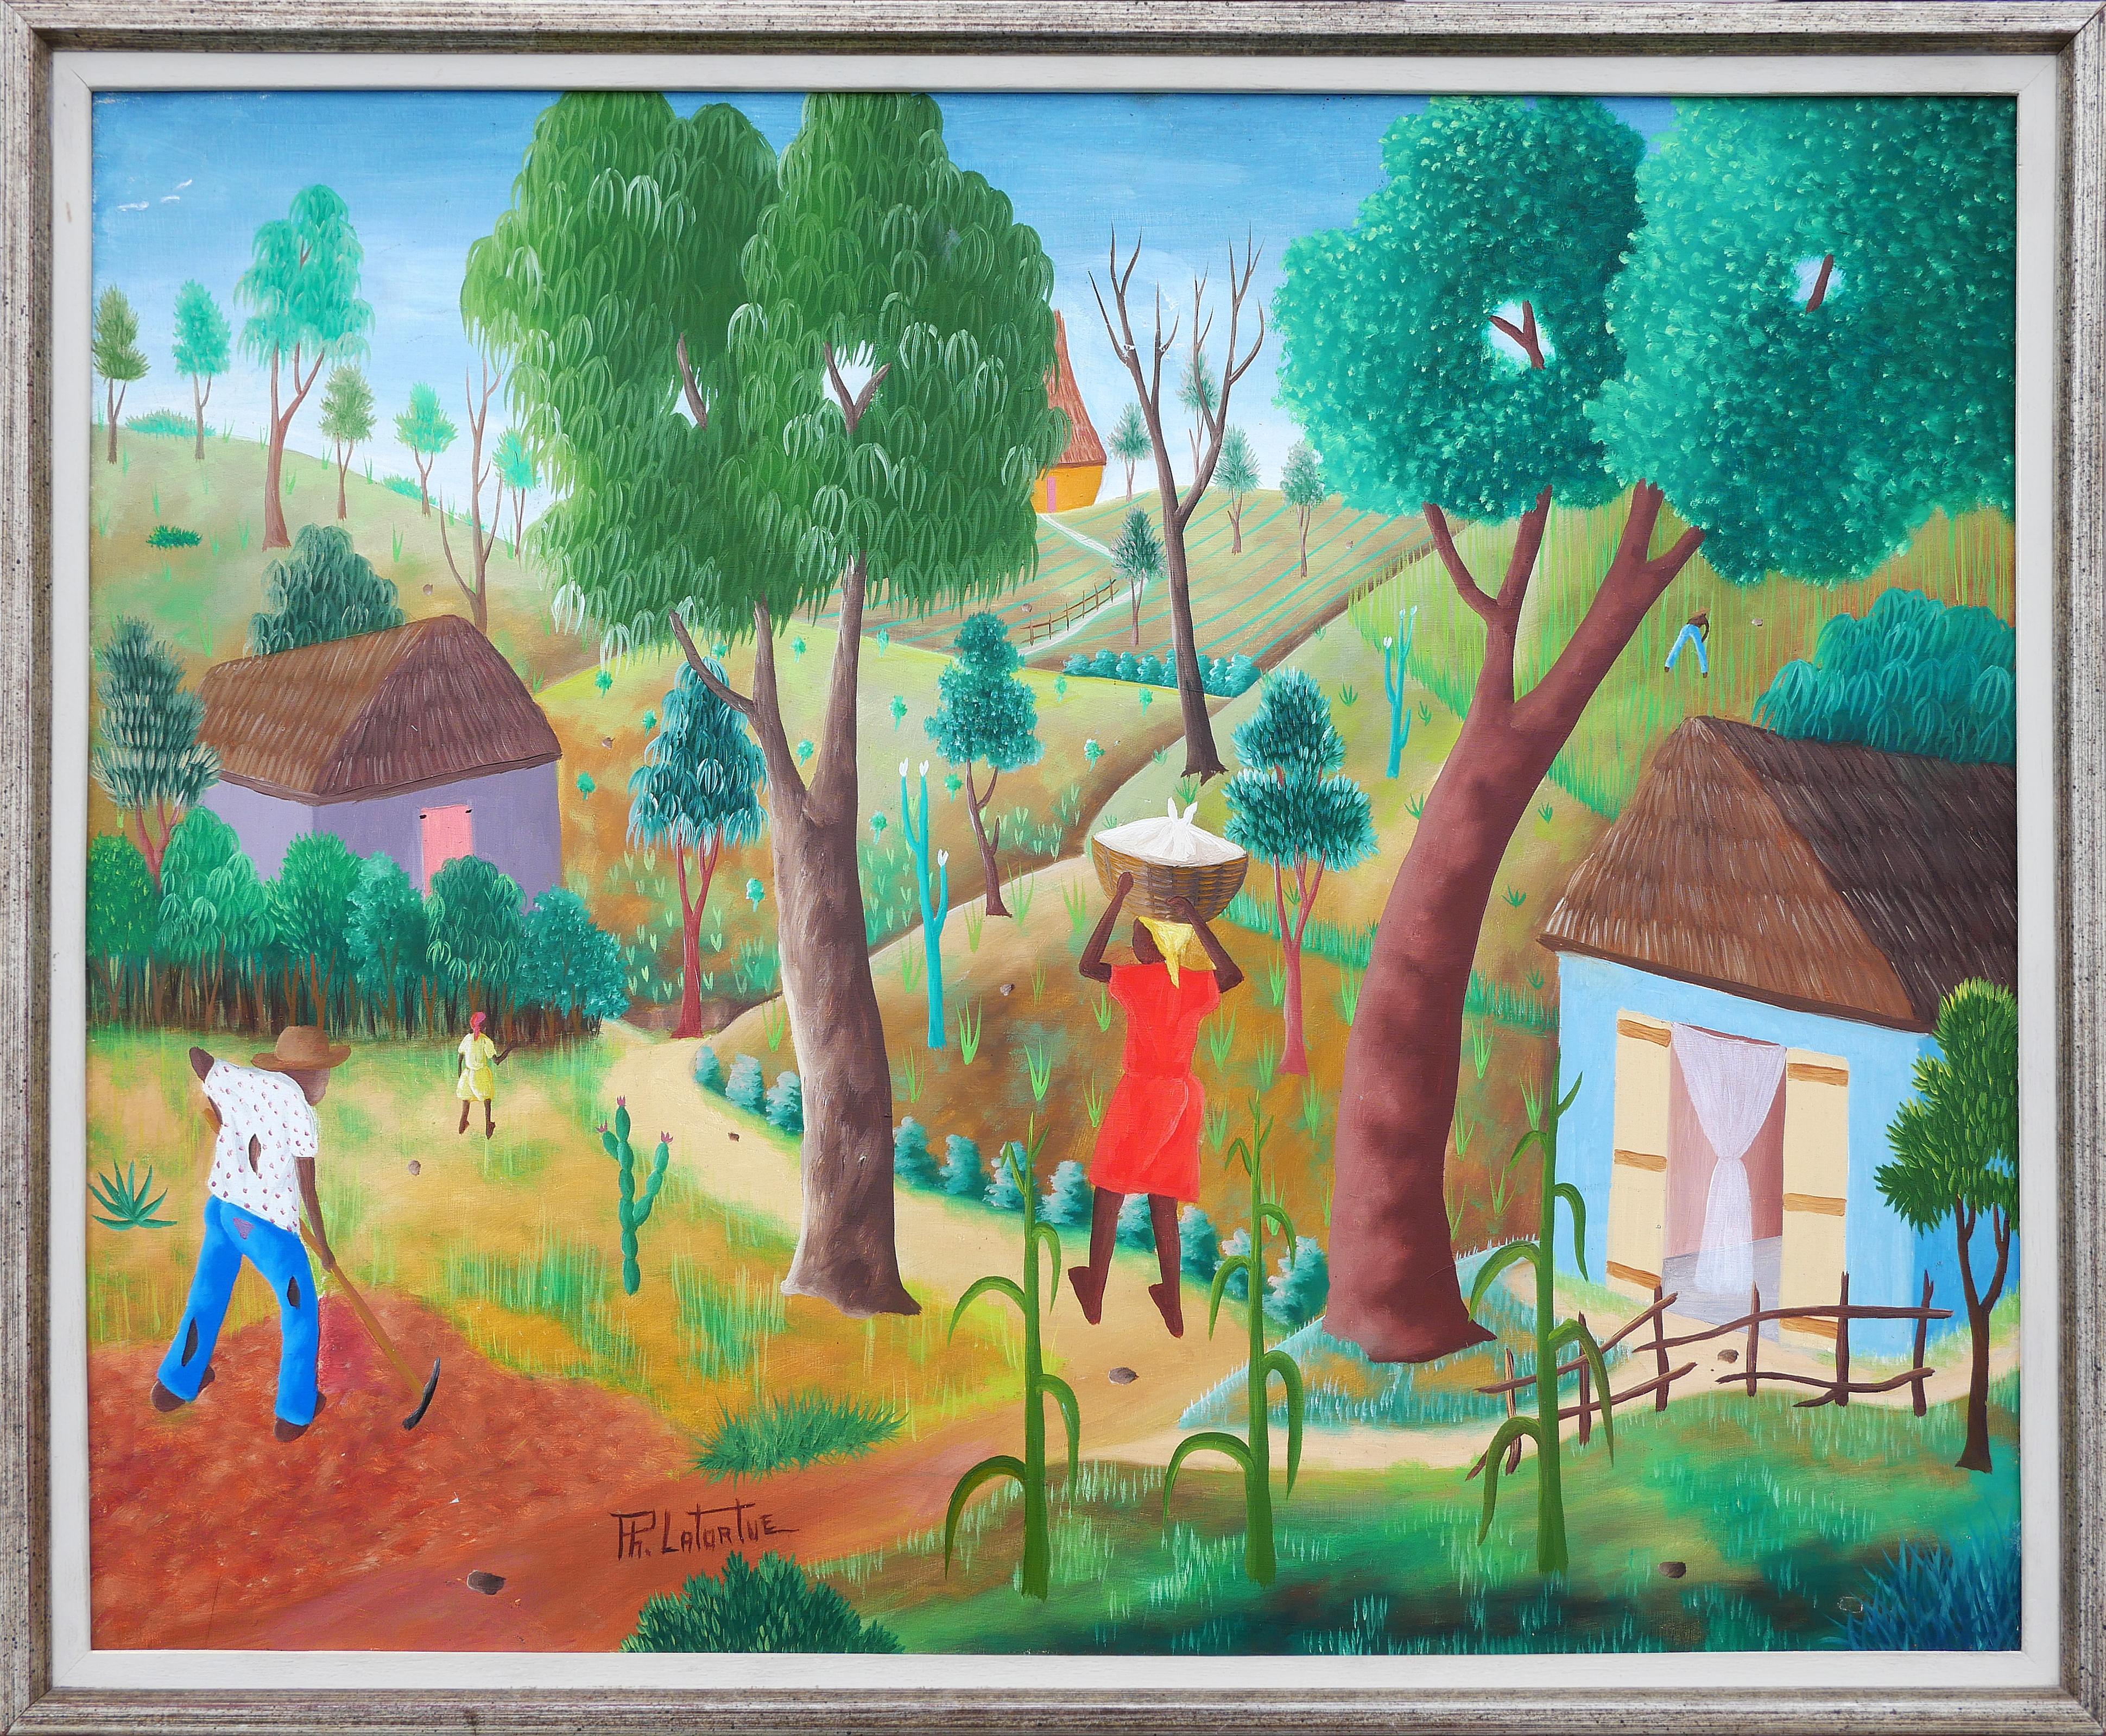 Philton Latortue Landscape Painting - Warm-Toned Modern Abstract Haitian Farm Plantation Landscape with Figures